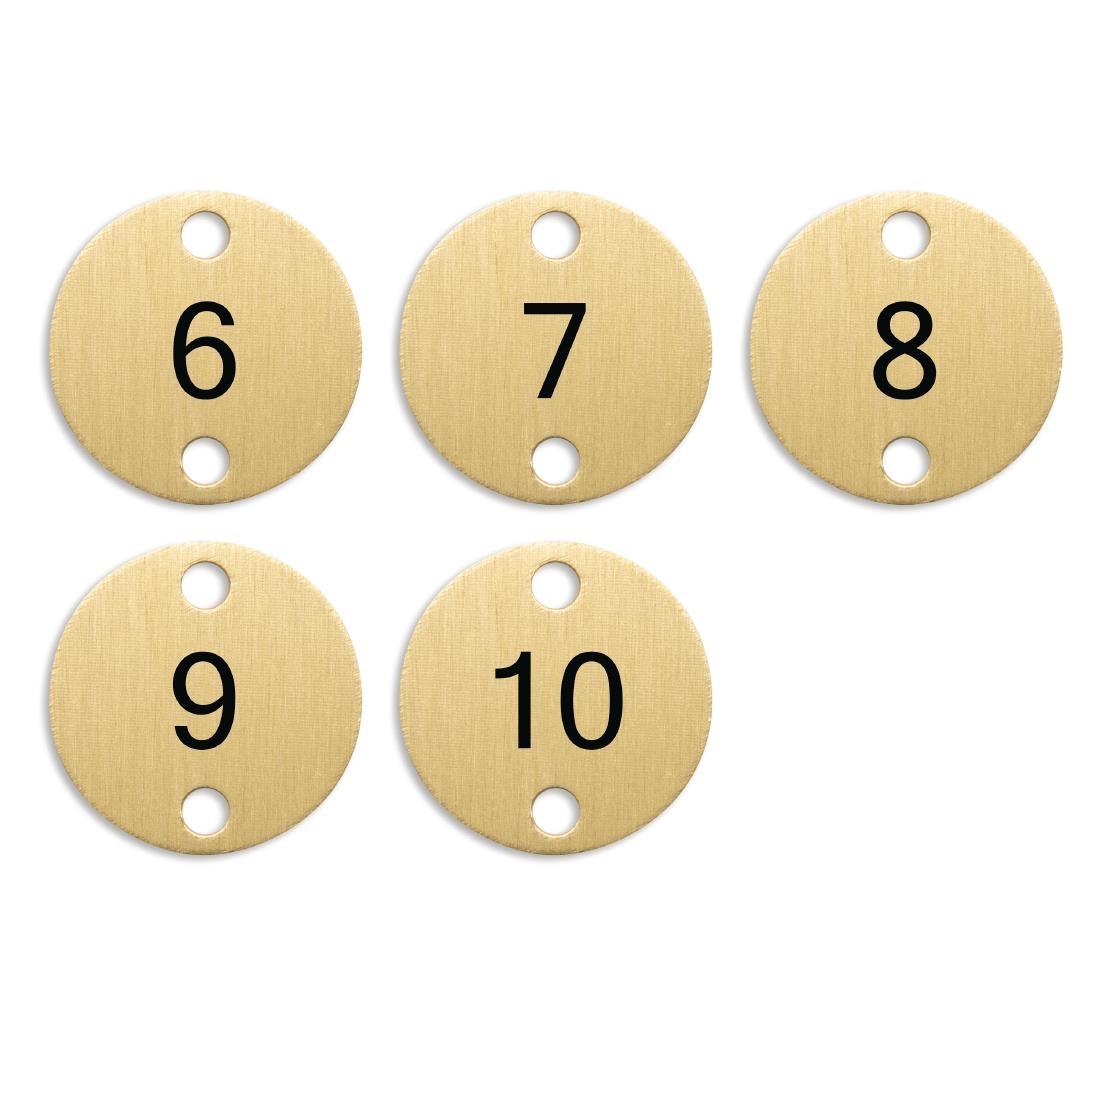 Bolero Table Numbers Bronze (6-10) - DY775  - 2